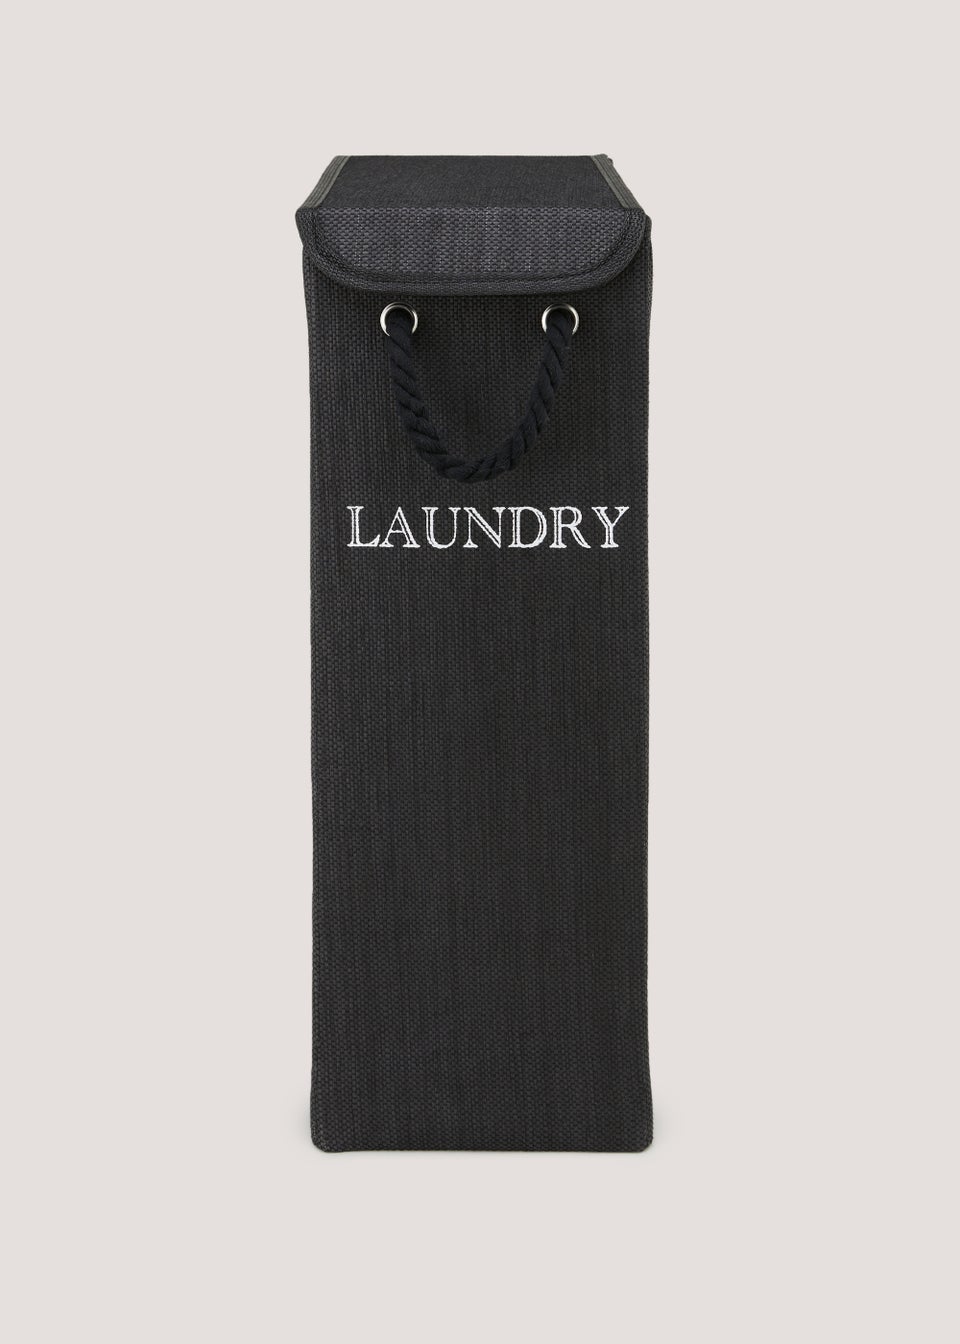 Black Narrow Laundry Basket (60cm x 40cm x 21cm)